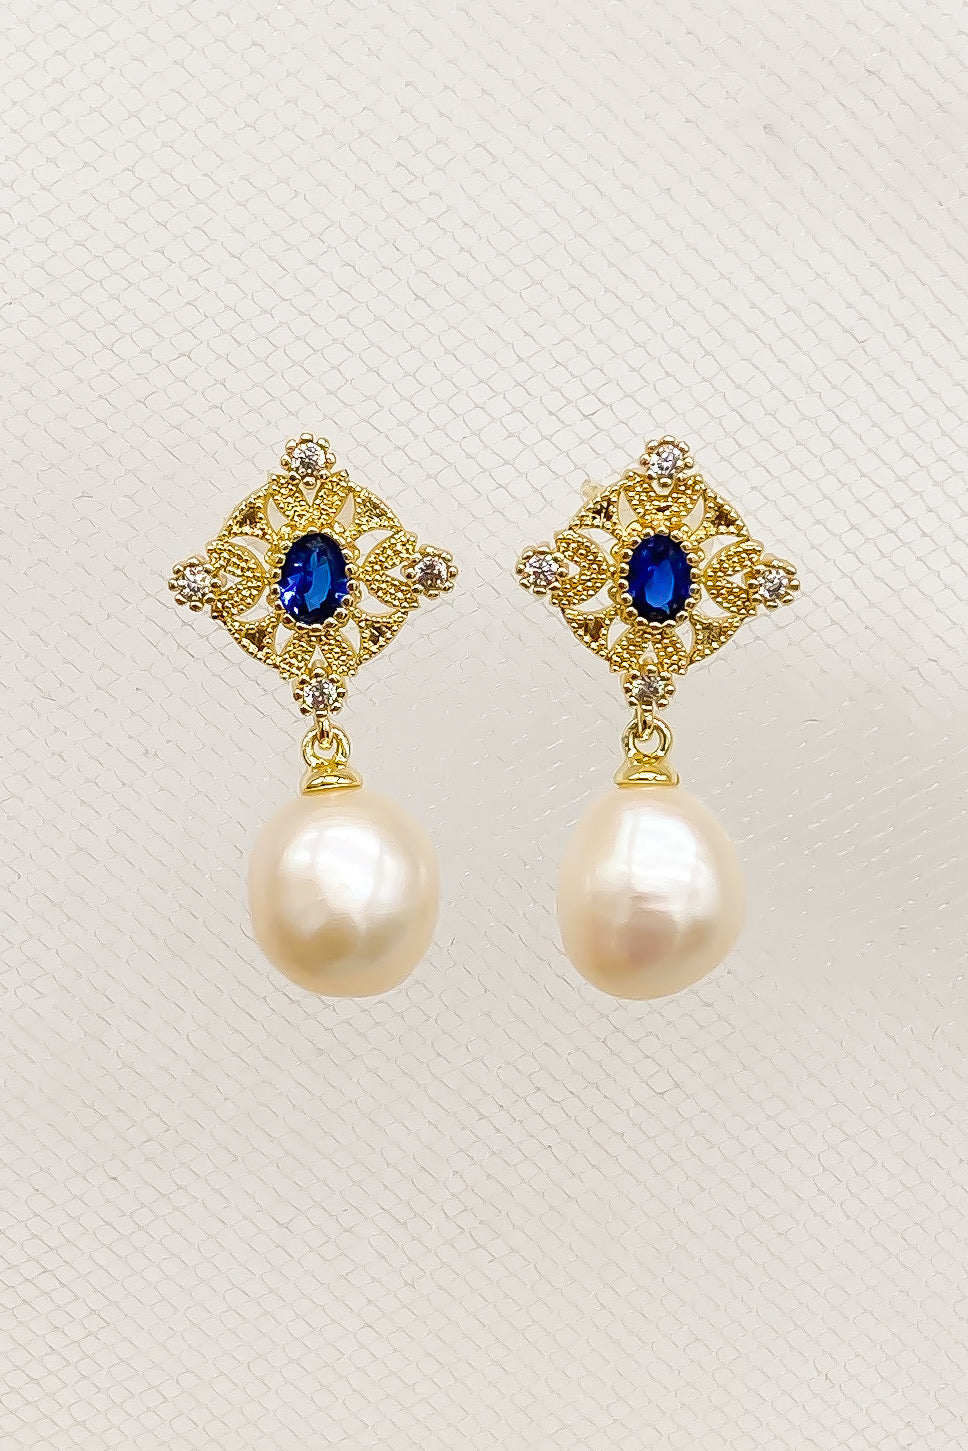 SKYE San Francisco Shop Chic Modern Elegant Classy Women Jewelry French Parisian Minimalist Regine Filigree Crystal Freshwater Pearl Earrings 4